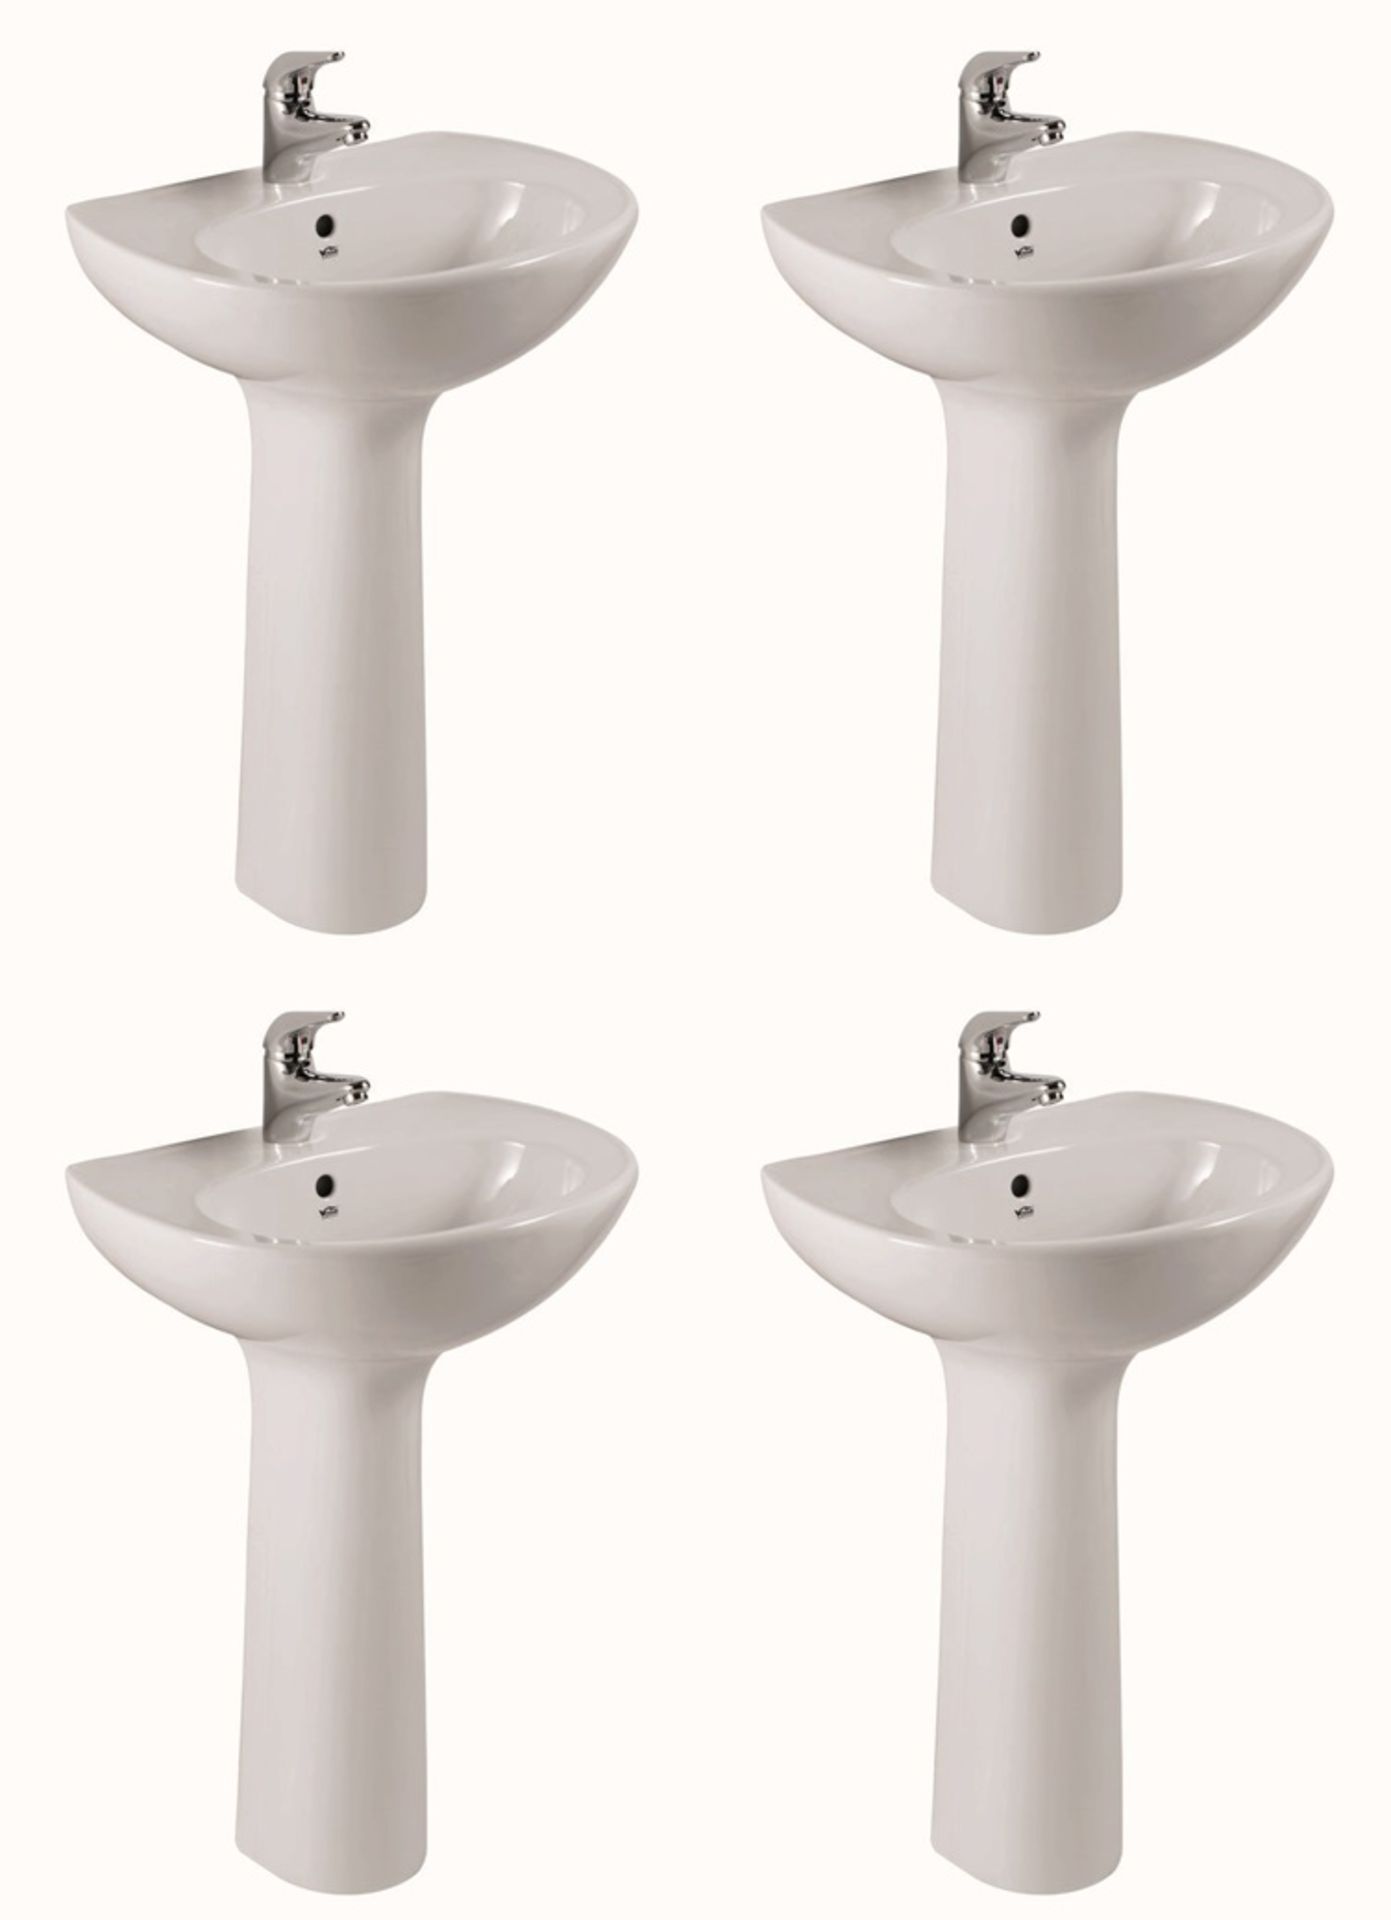 4 x Vogue Bathrooms KARIDI Single Tap Hole SINK BASINS With Full Pedestals - 550mm Width - Brand New